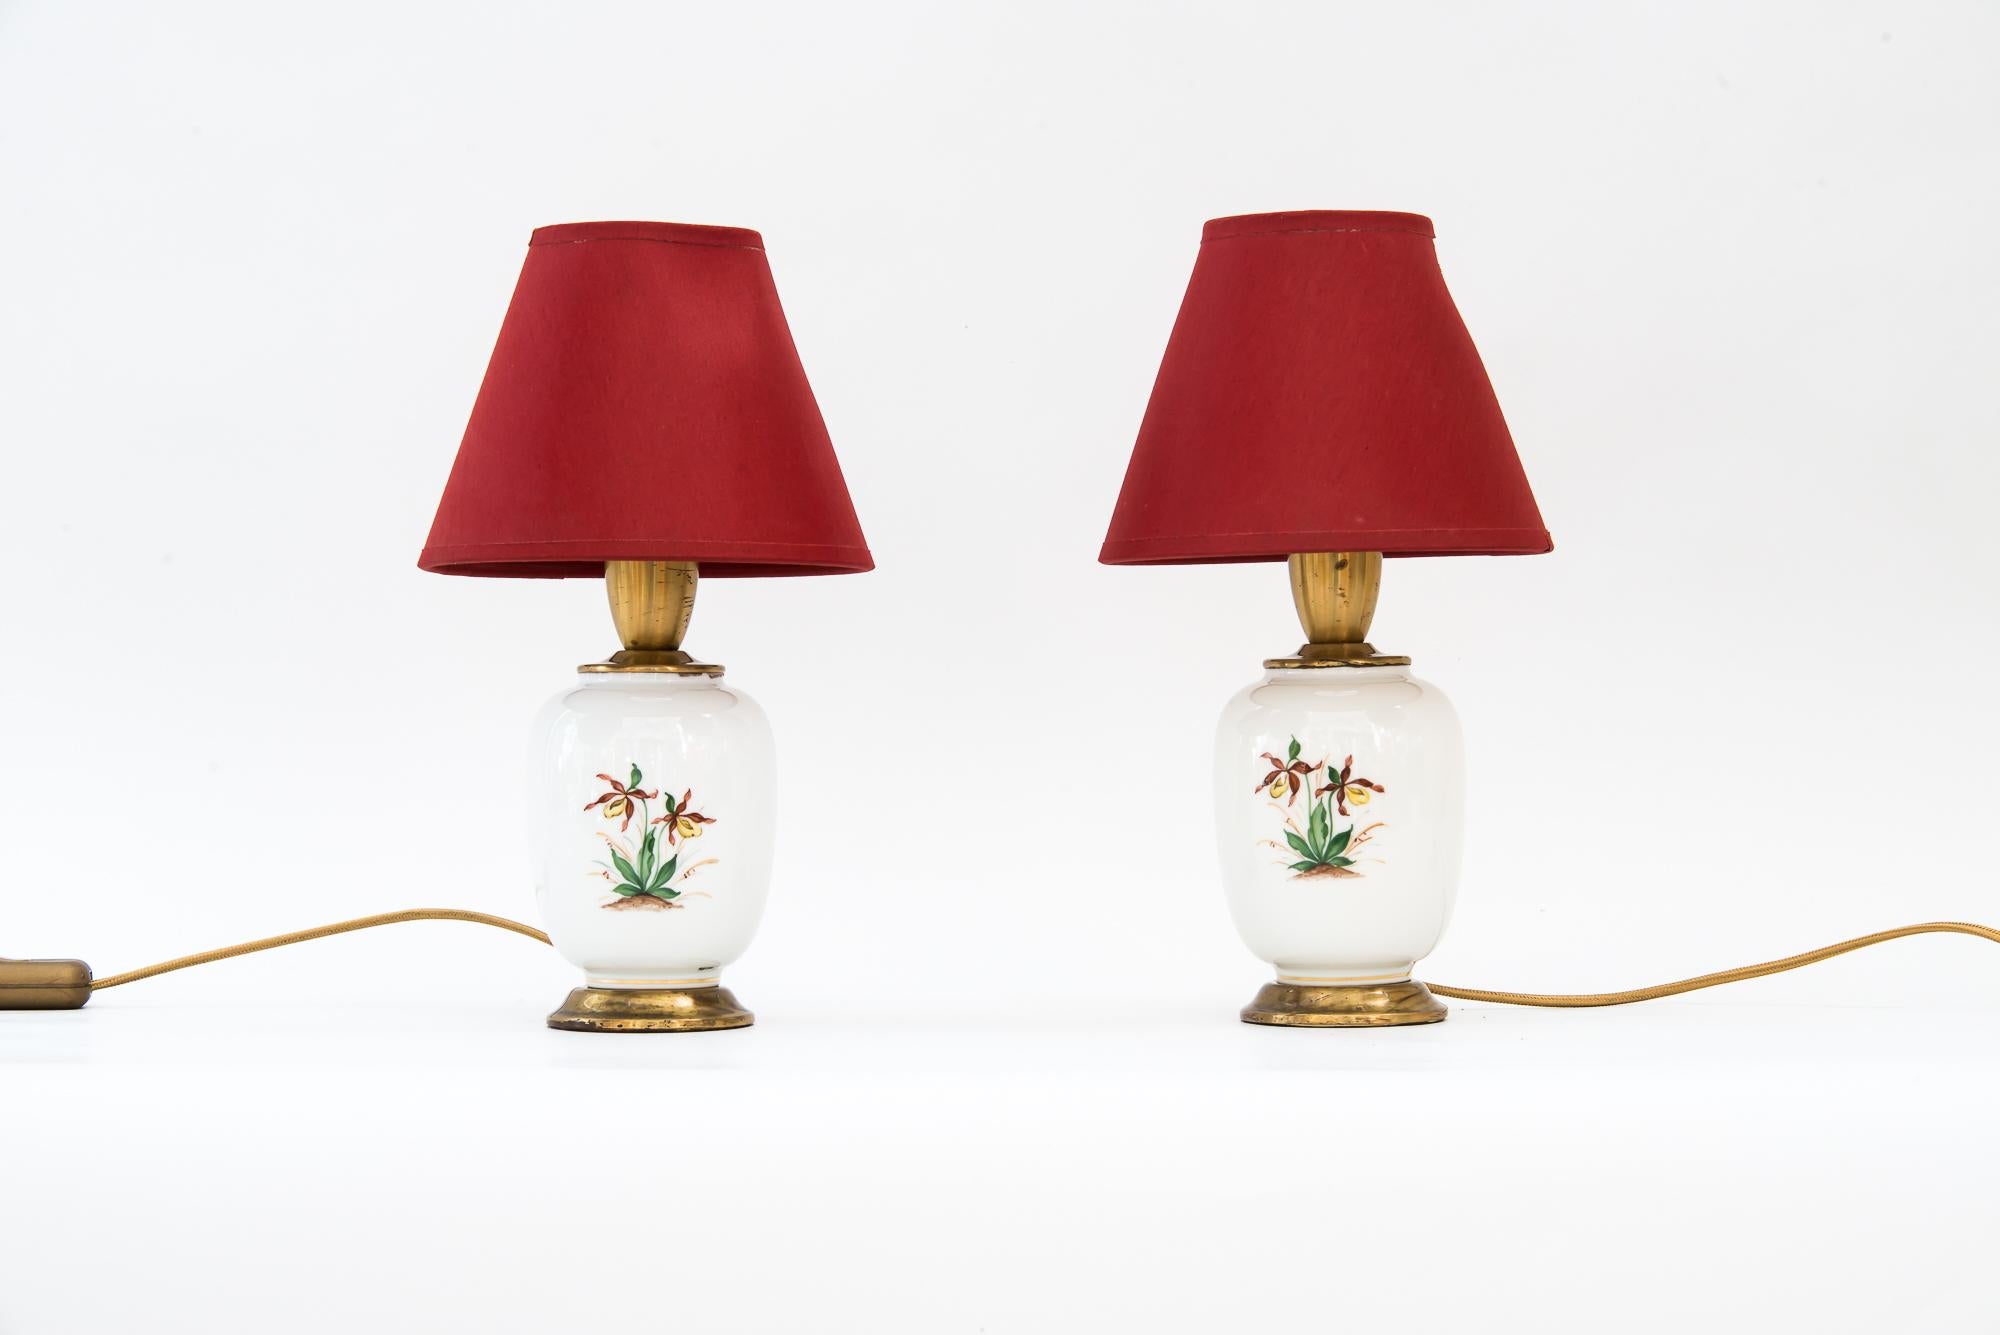 2 Augarten table lamps, Vienna, circa 1960s
High quality porcelain with original shades
Original condition.
 